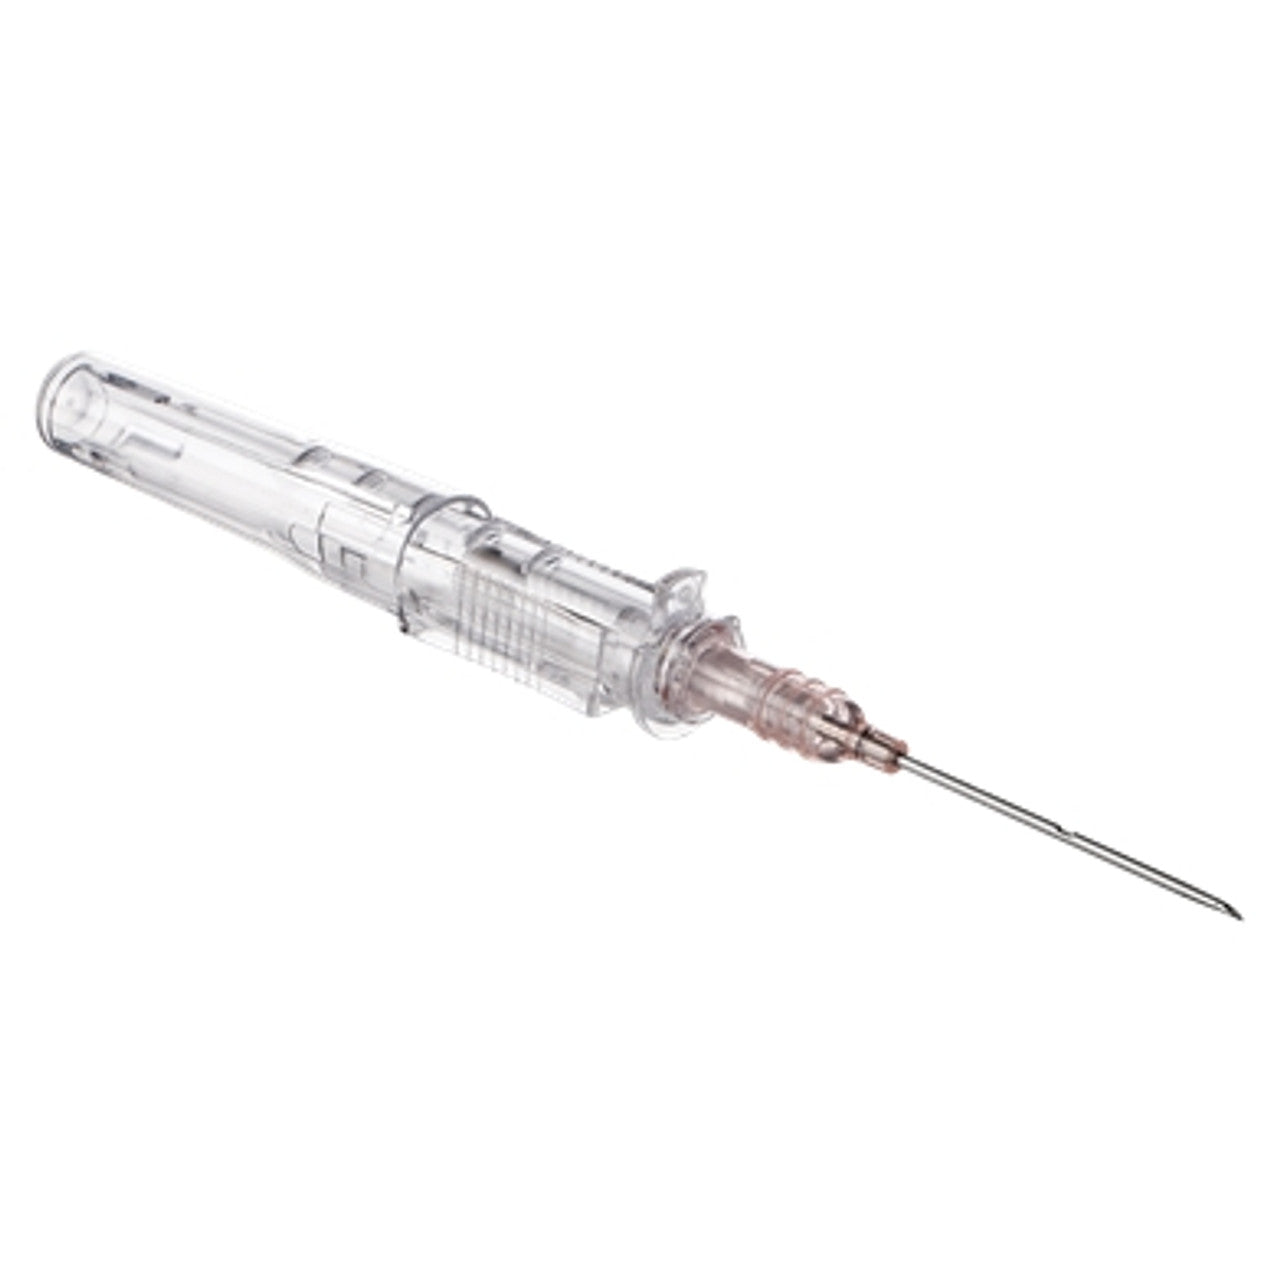 SMITHS MEDICAL 326310 ViaValve IV Safety Catheter, 24G X 5/8", 200/cs RX ONLY